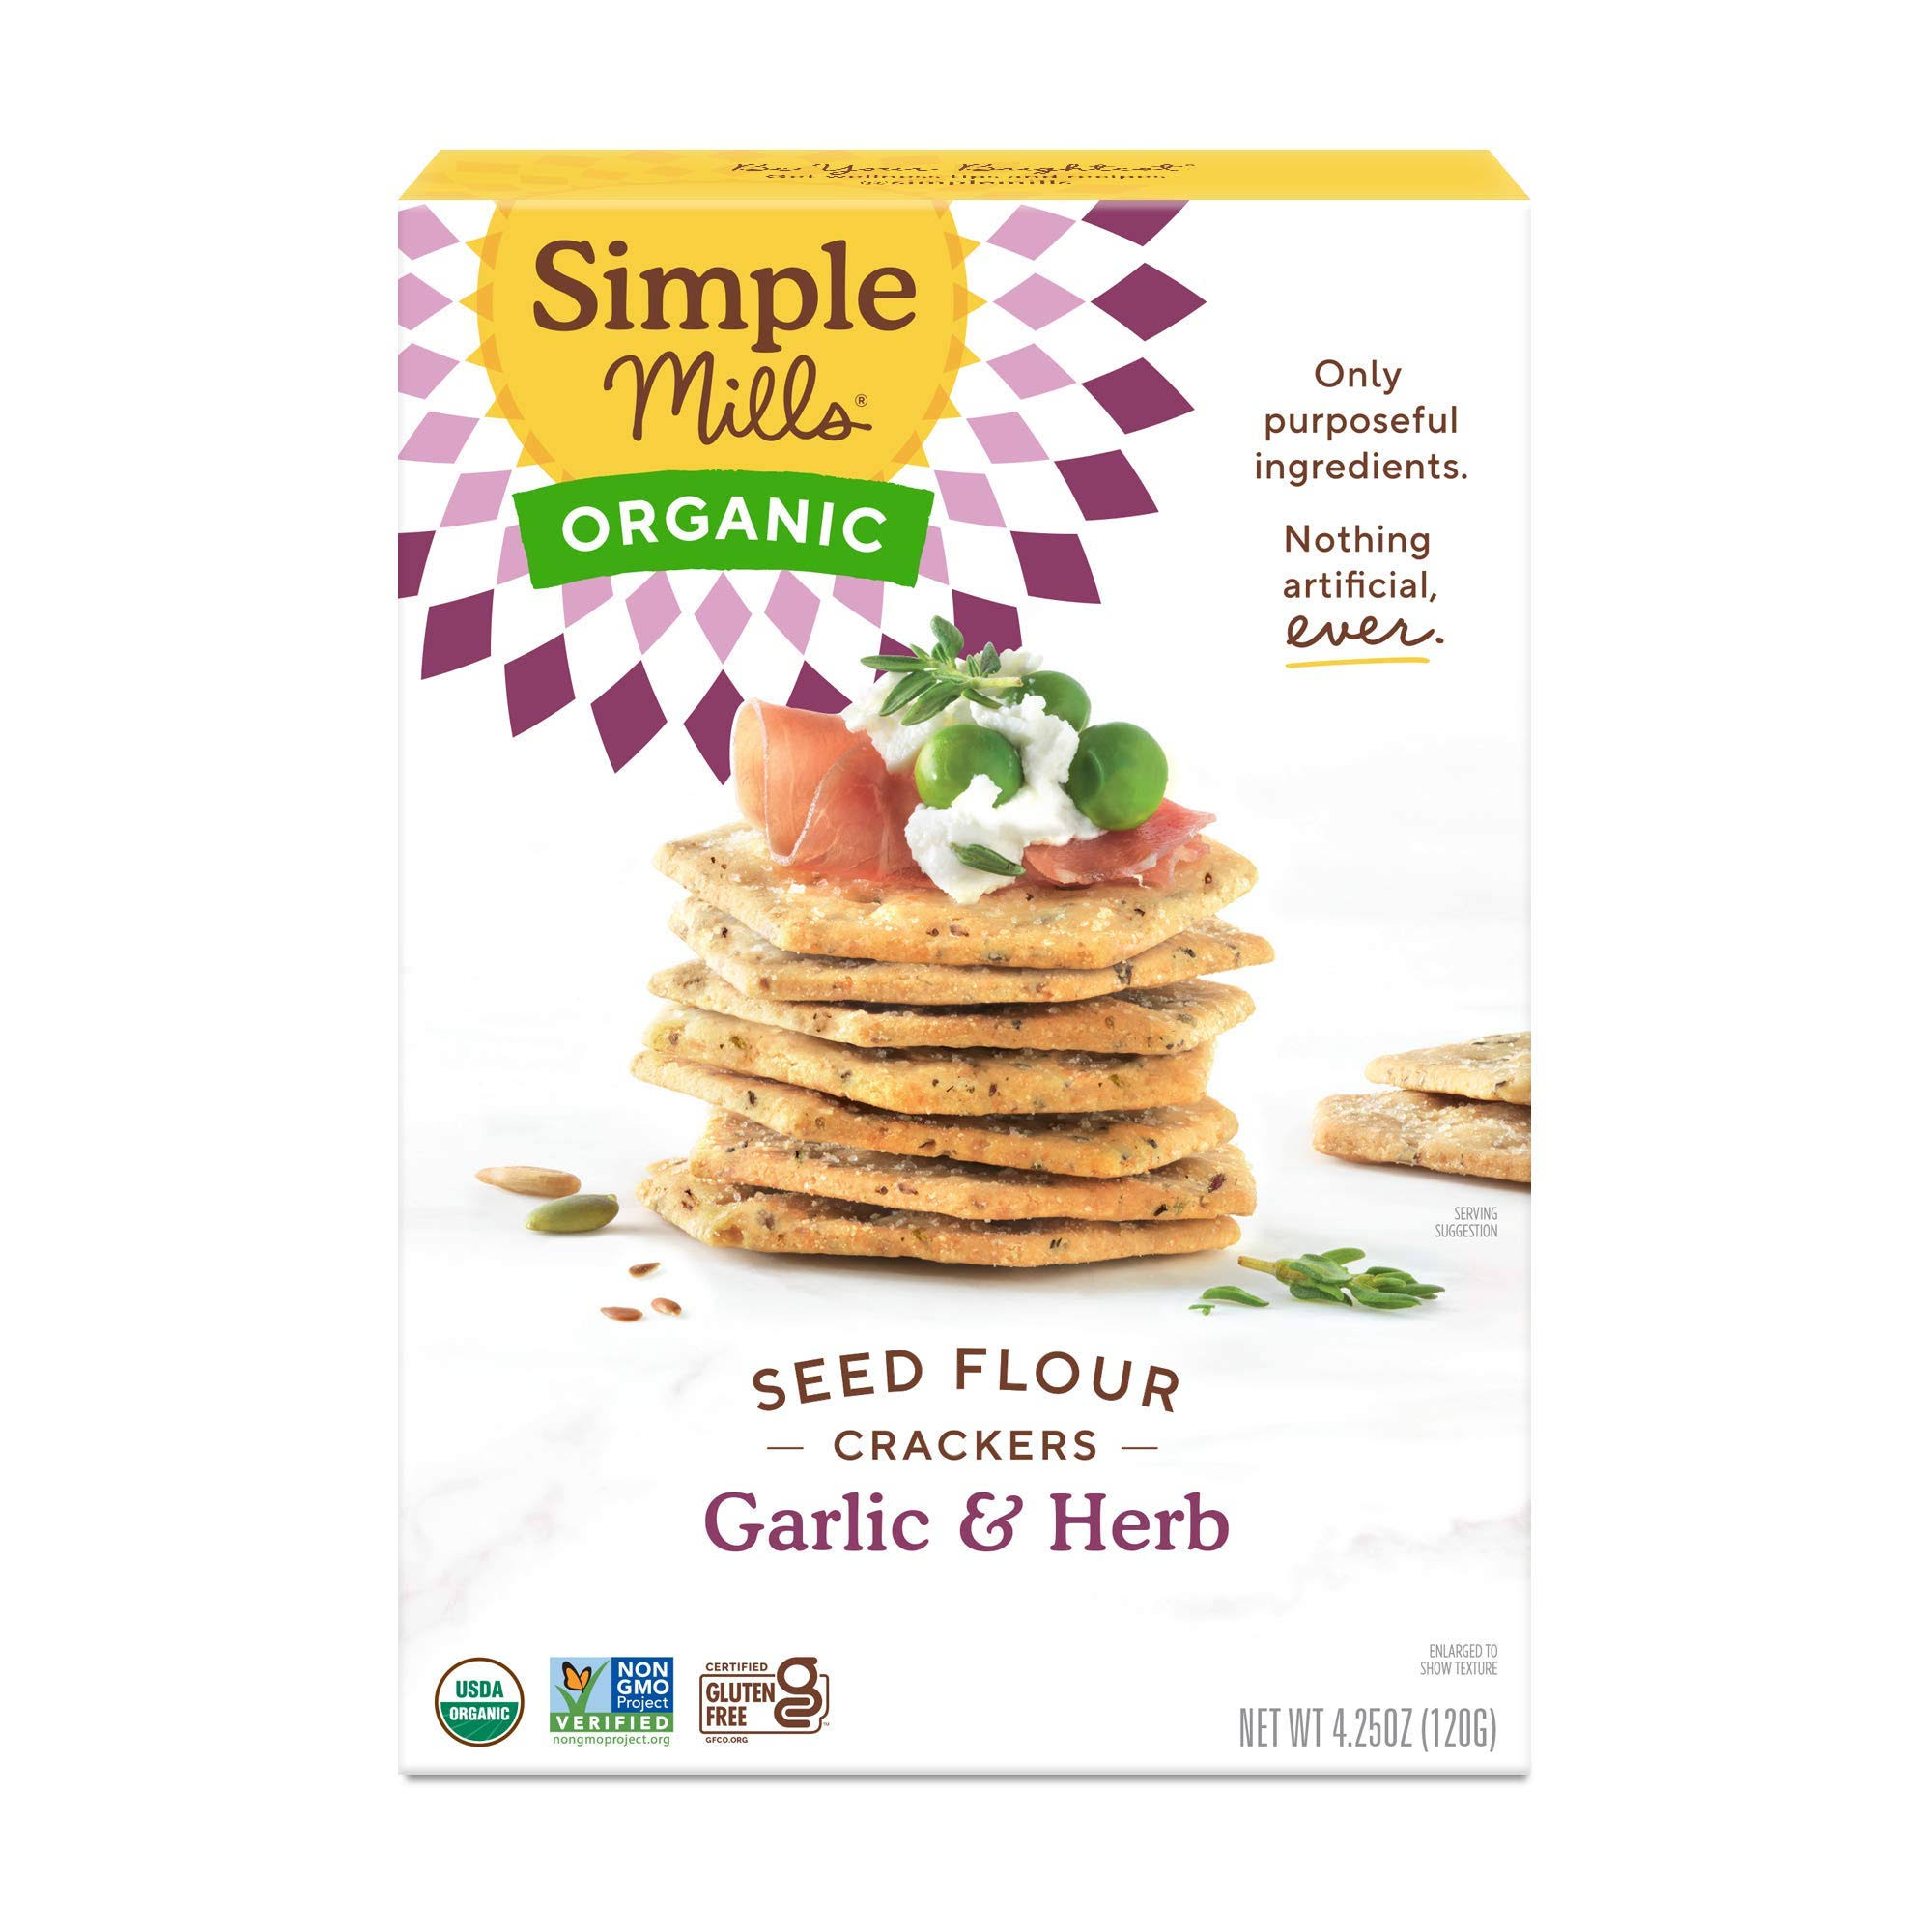 Simple Mills Crackers, Organic, Garlic & Herb, Seed Flour - 4.25 oz